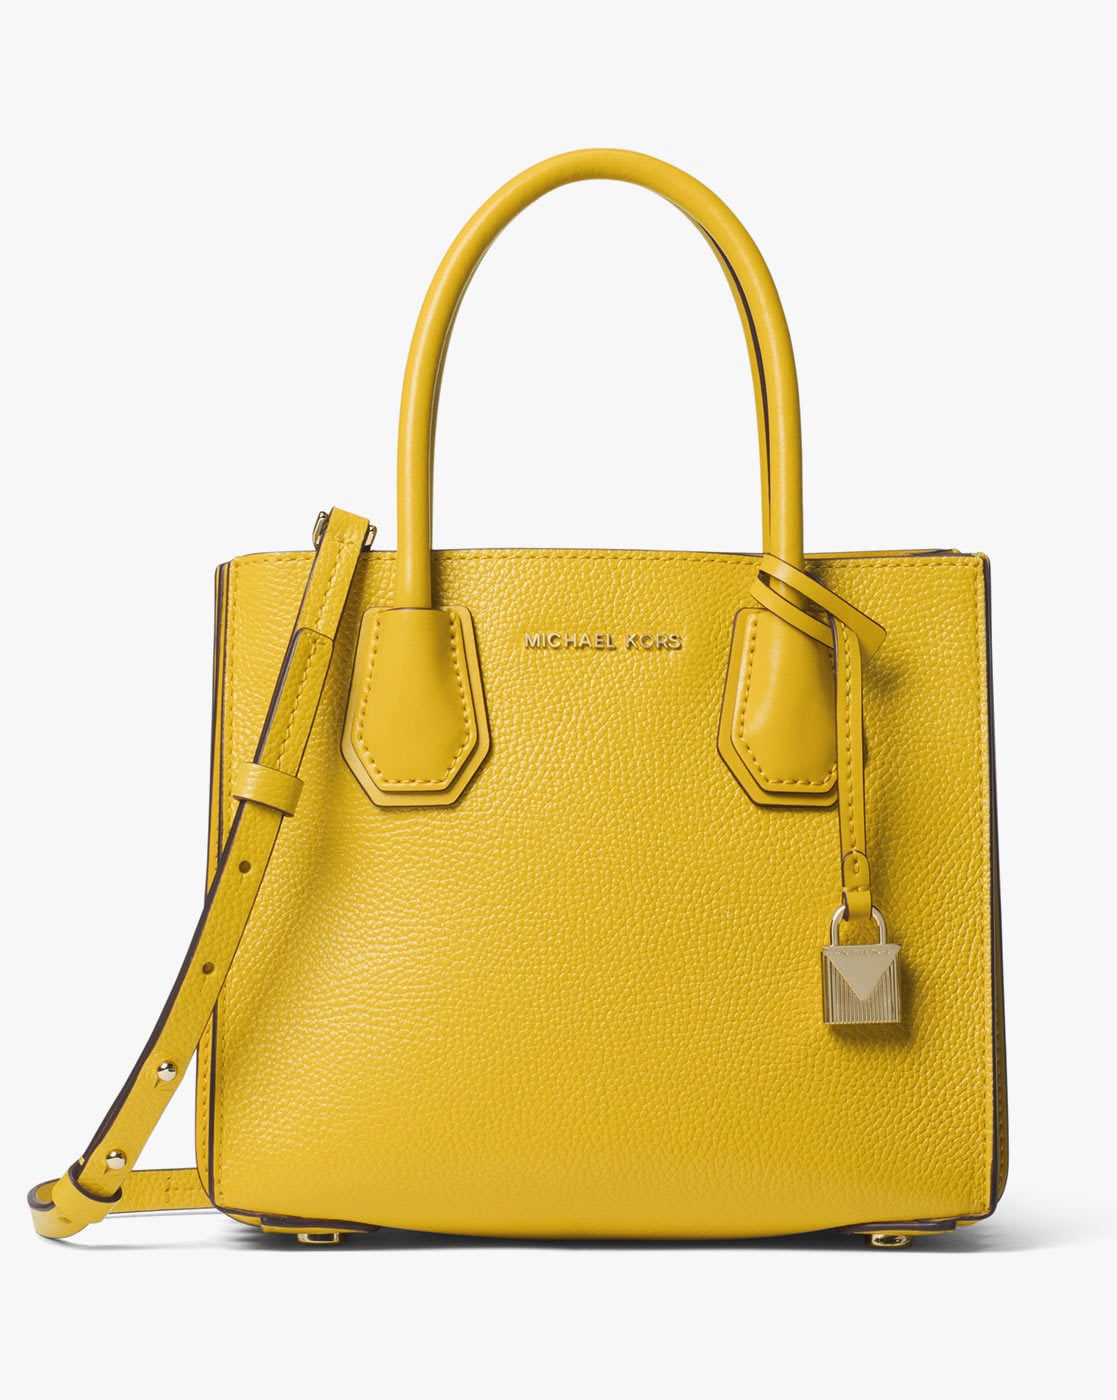 Buy Yellow Handbags for Women by Michael Kors Online 